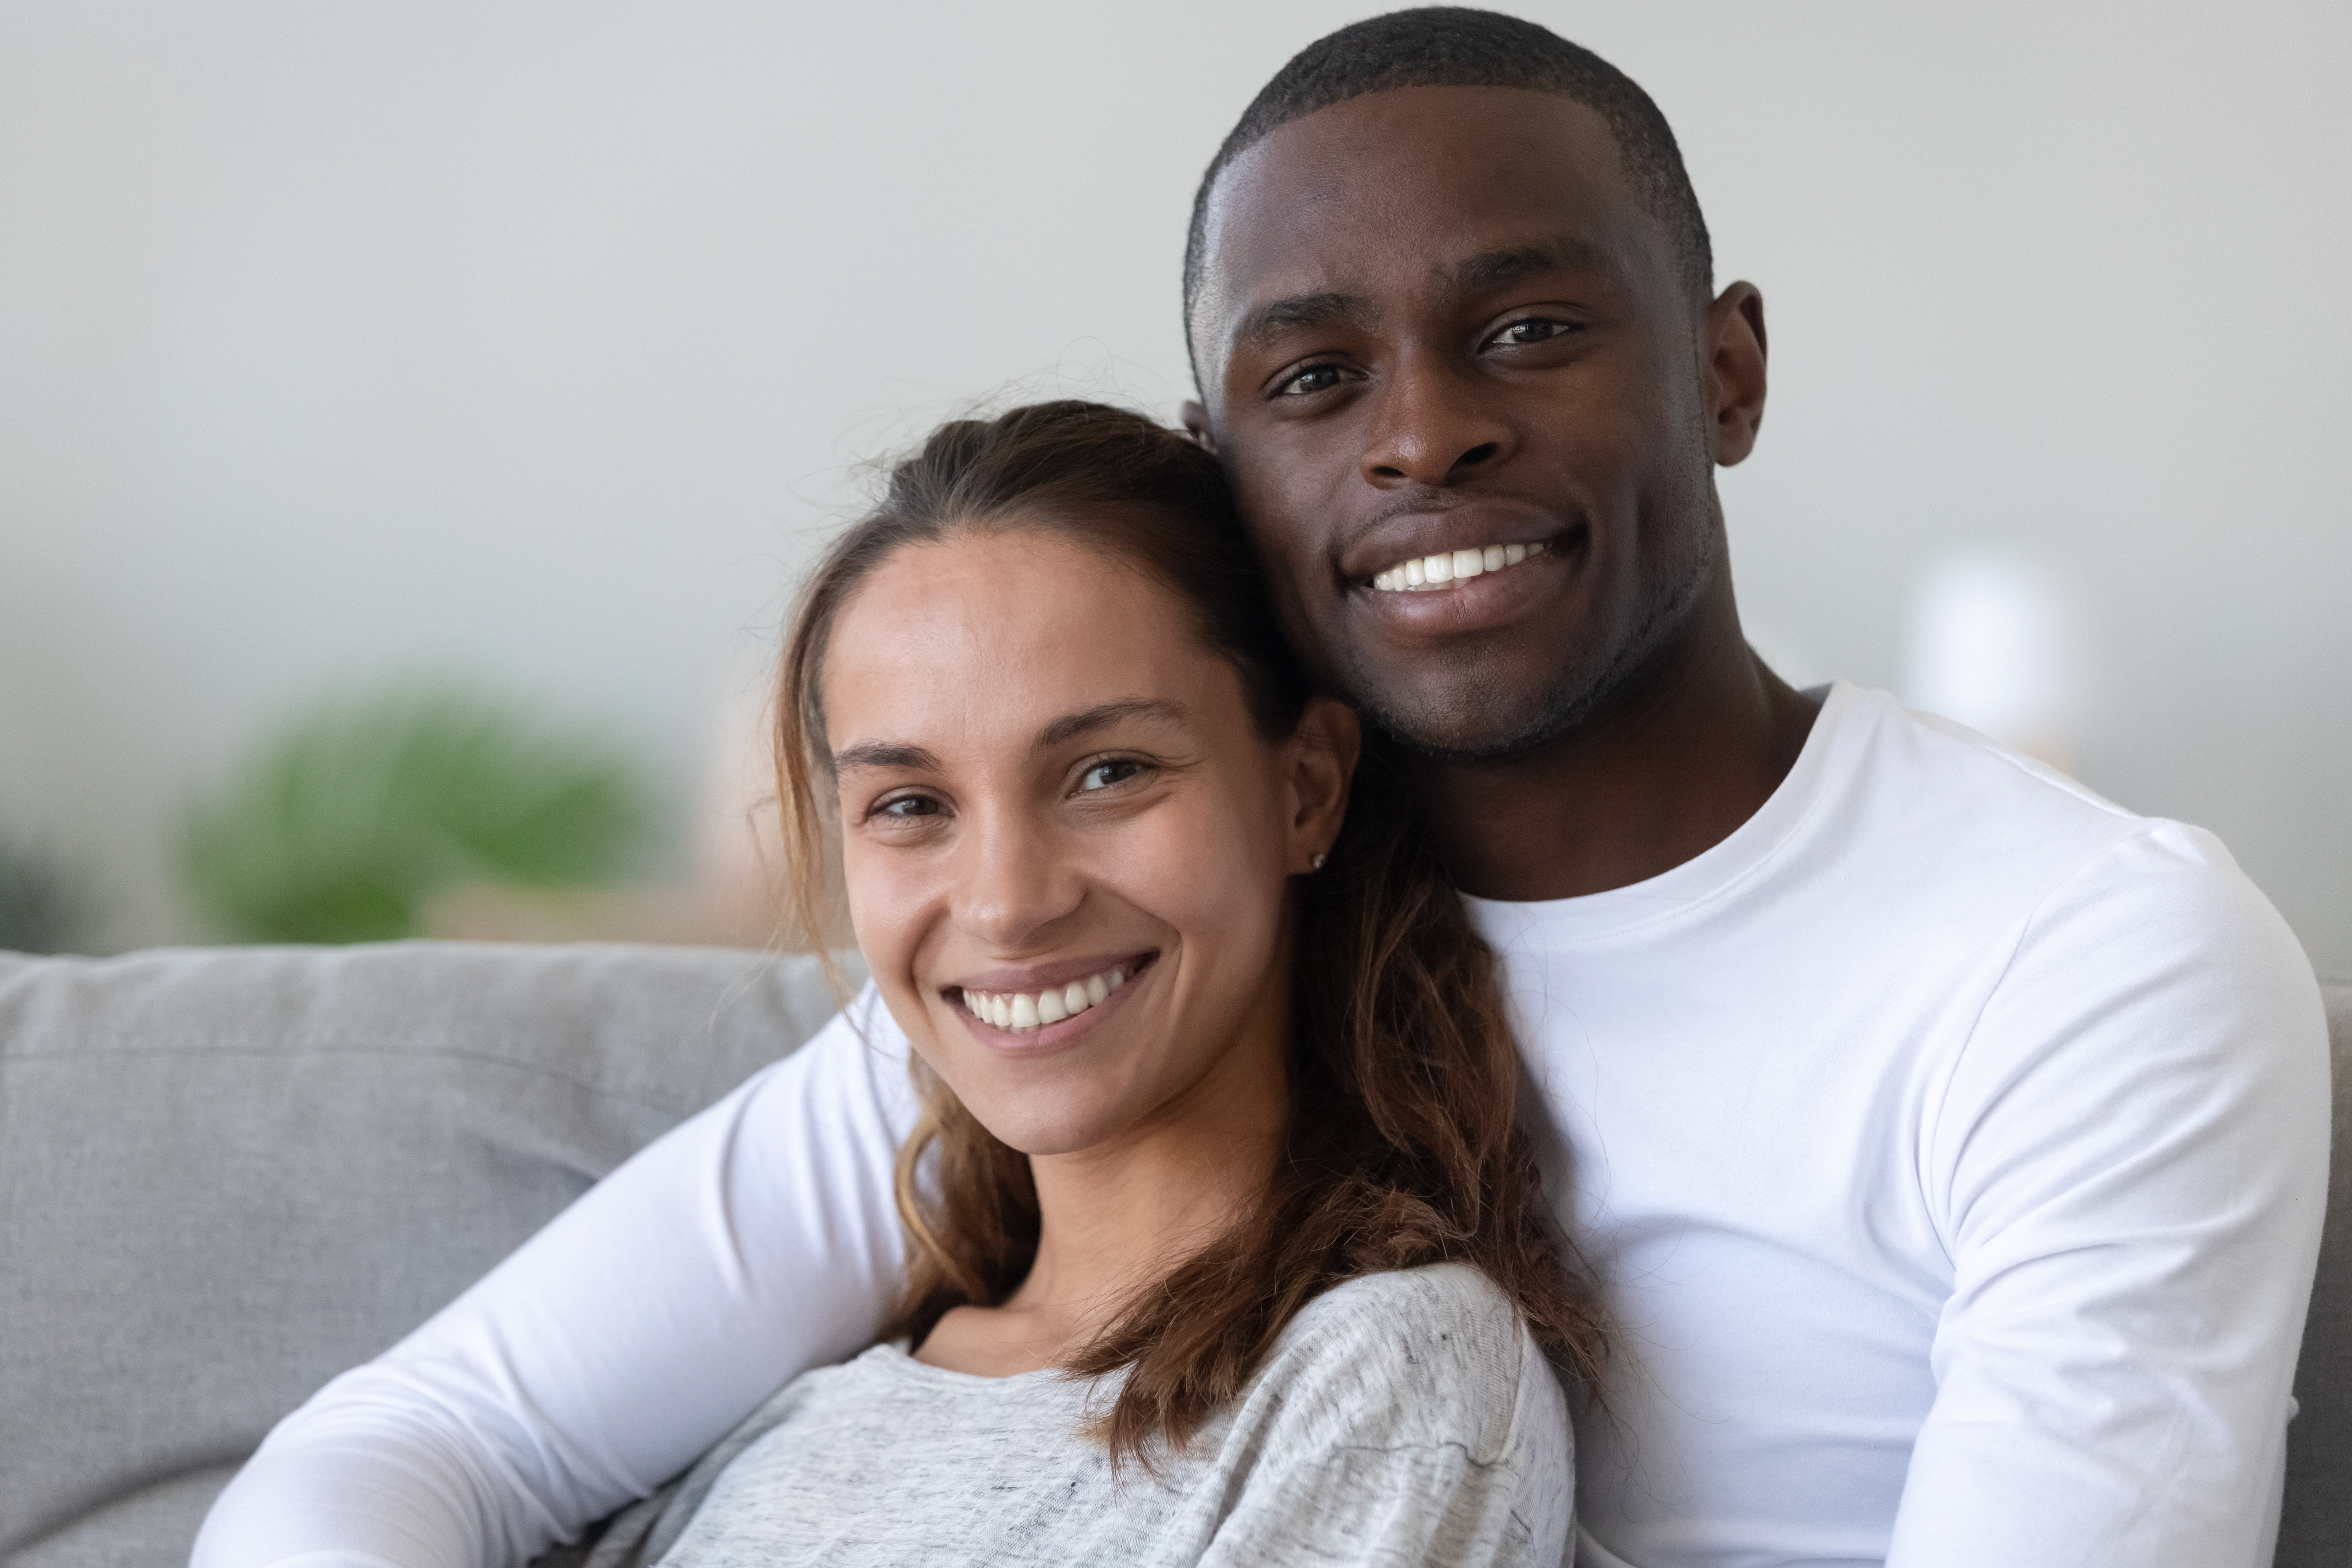 Mixed-race couple | Source: Shutterstock